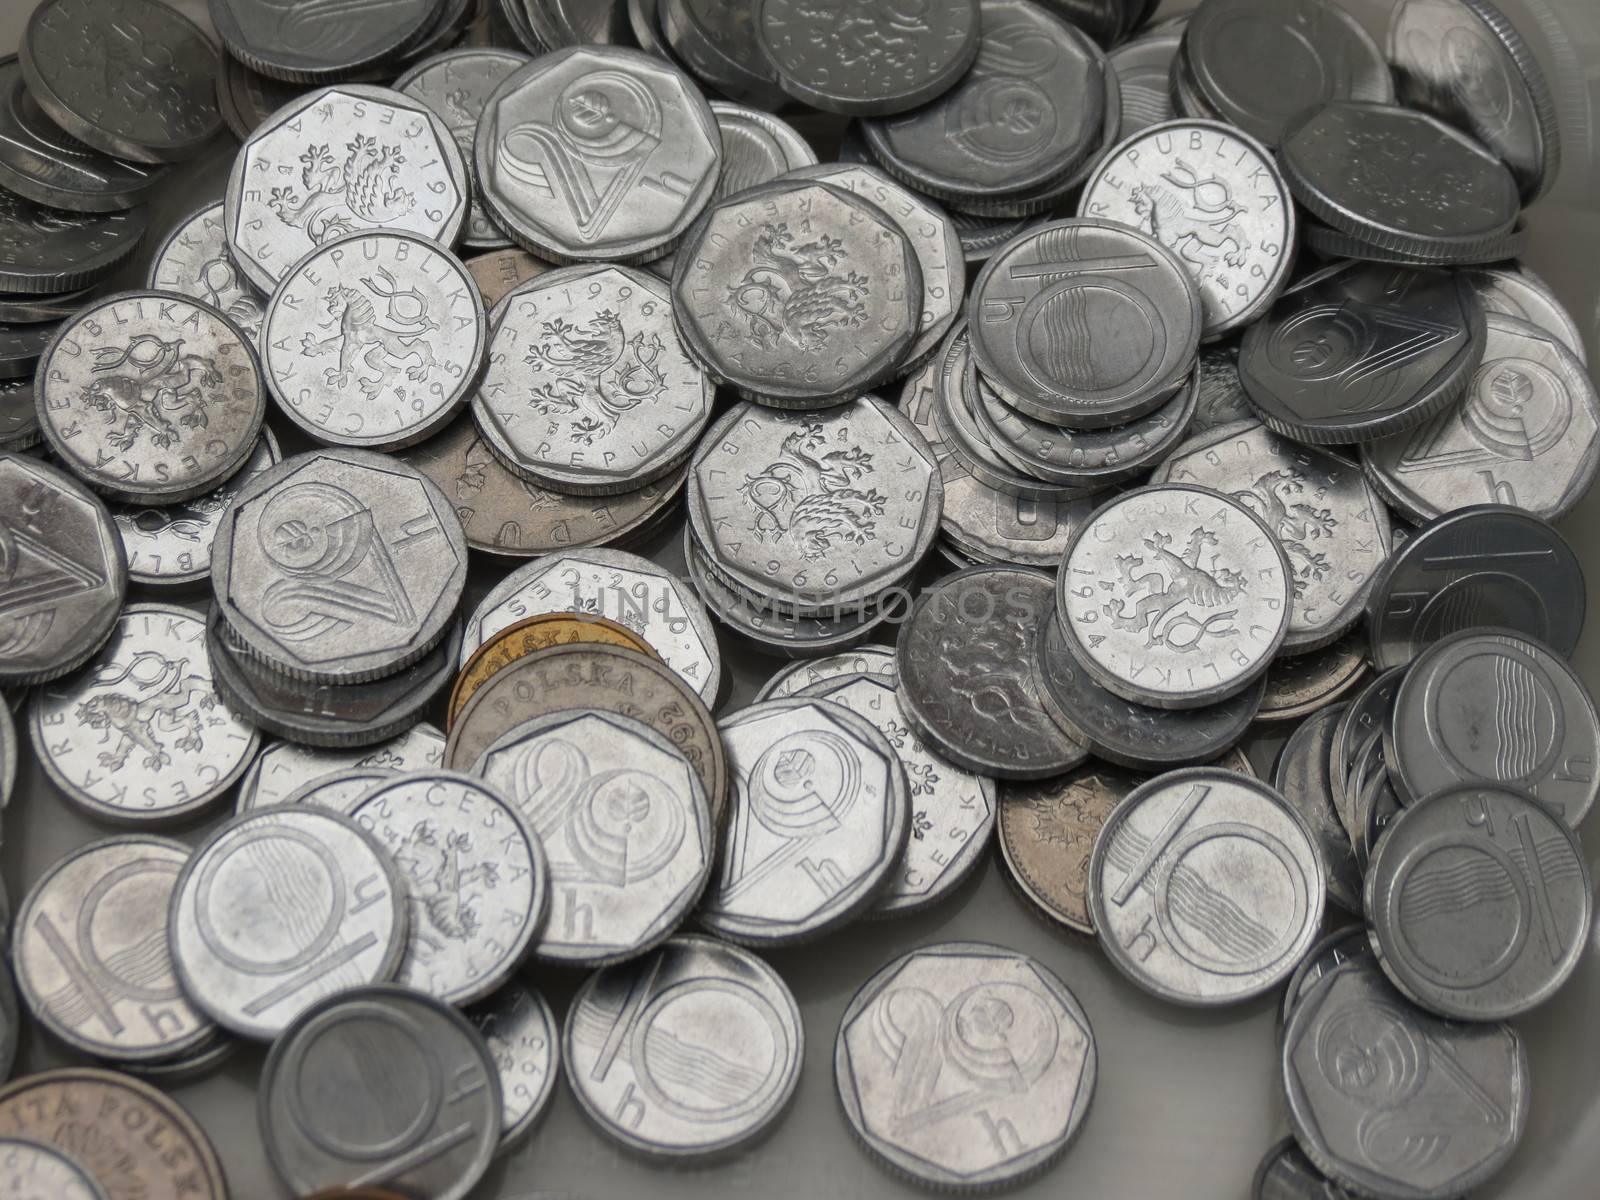 Czech korunas coins by paolo77